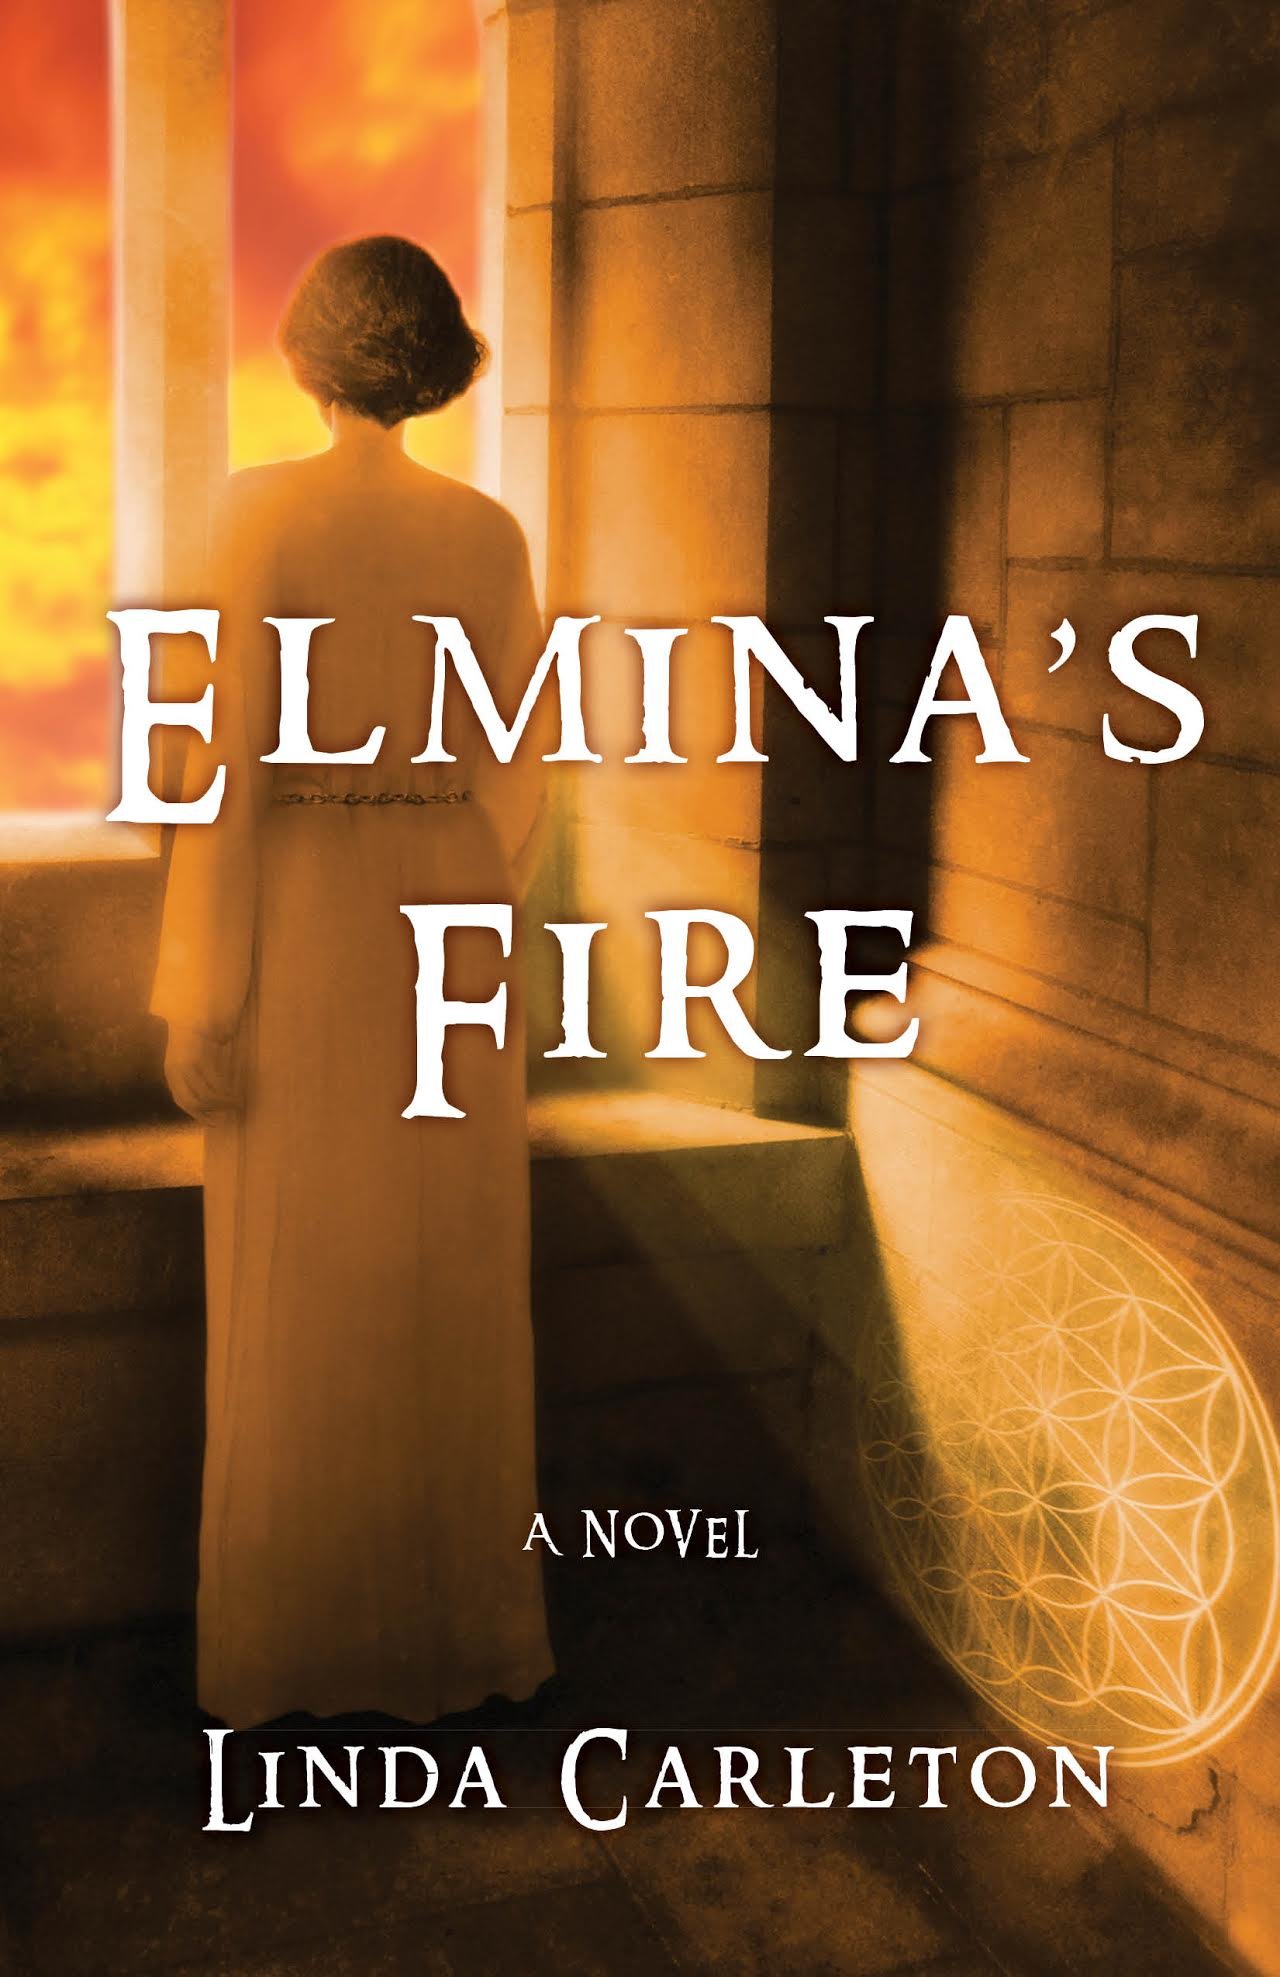 Elmina’s Fire by Linda Carleton